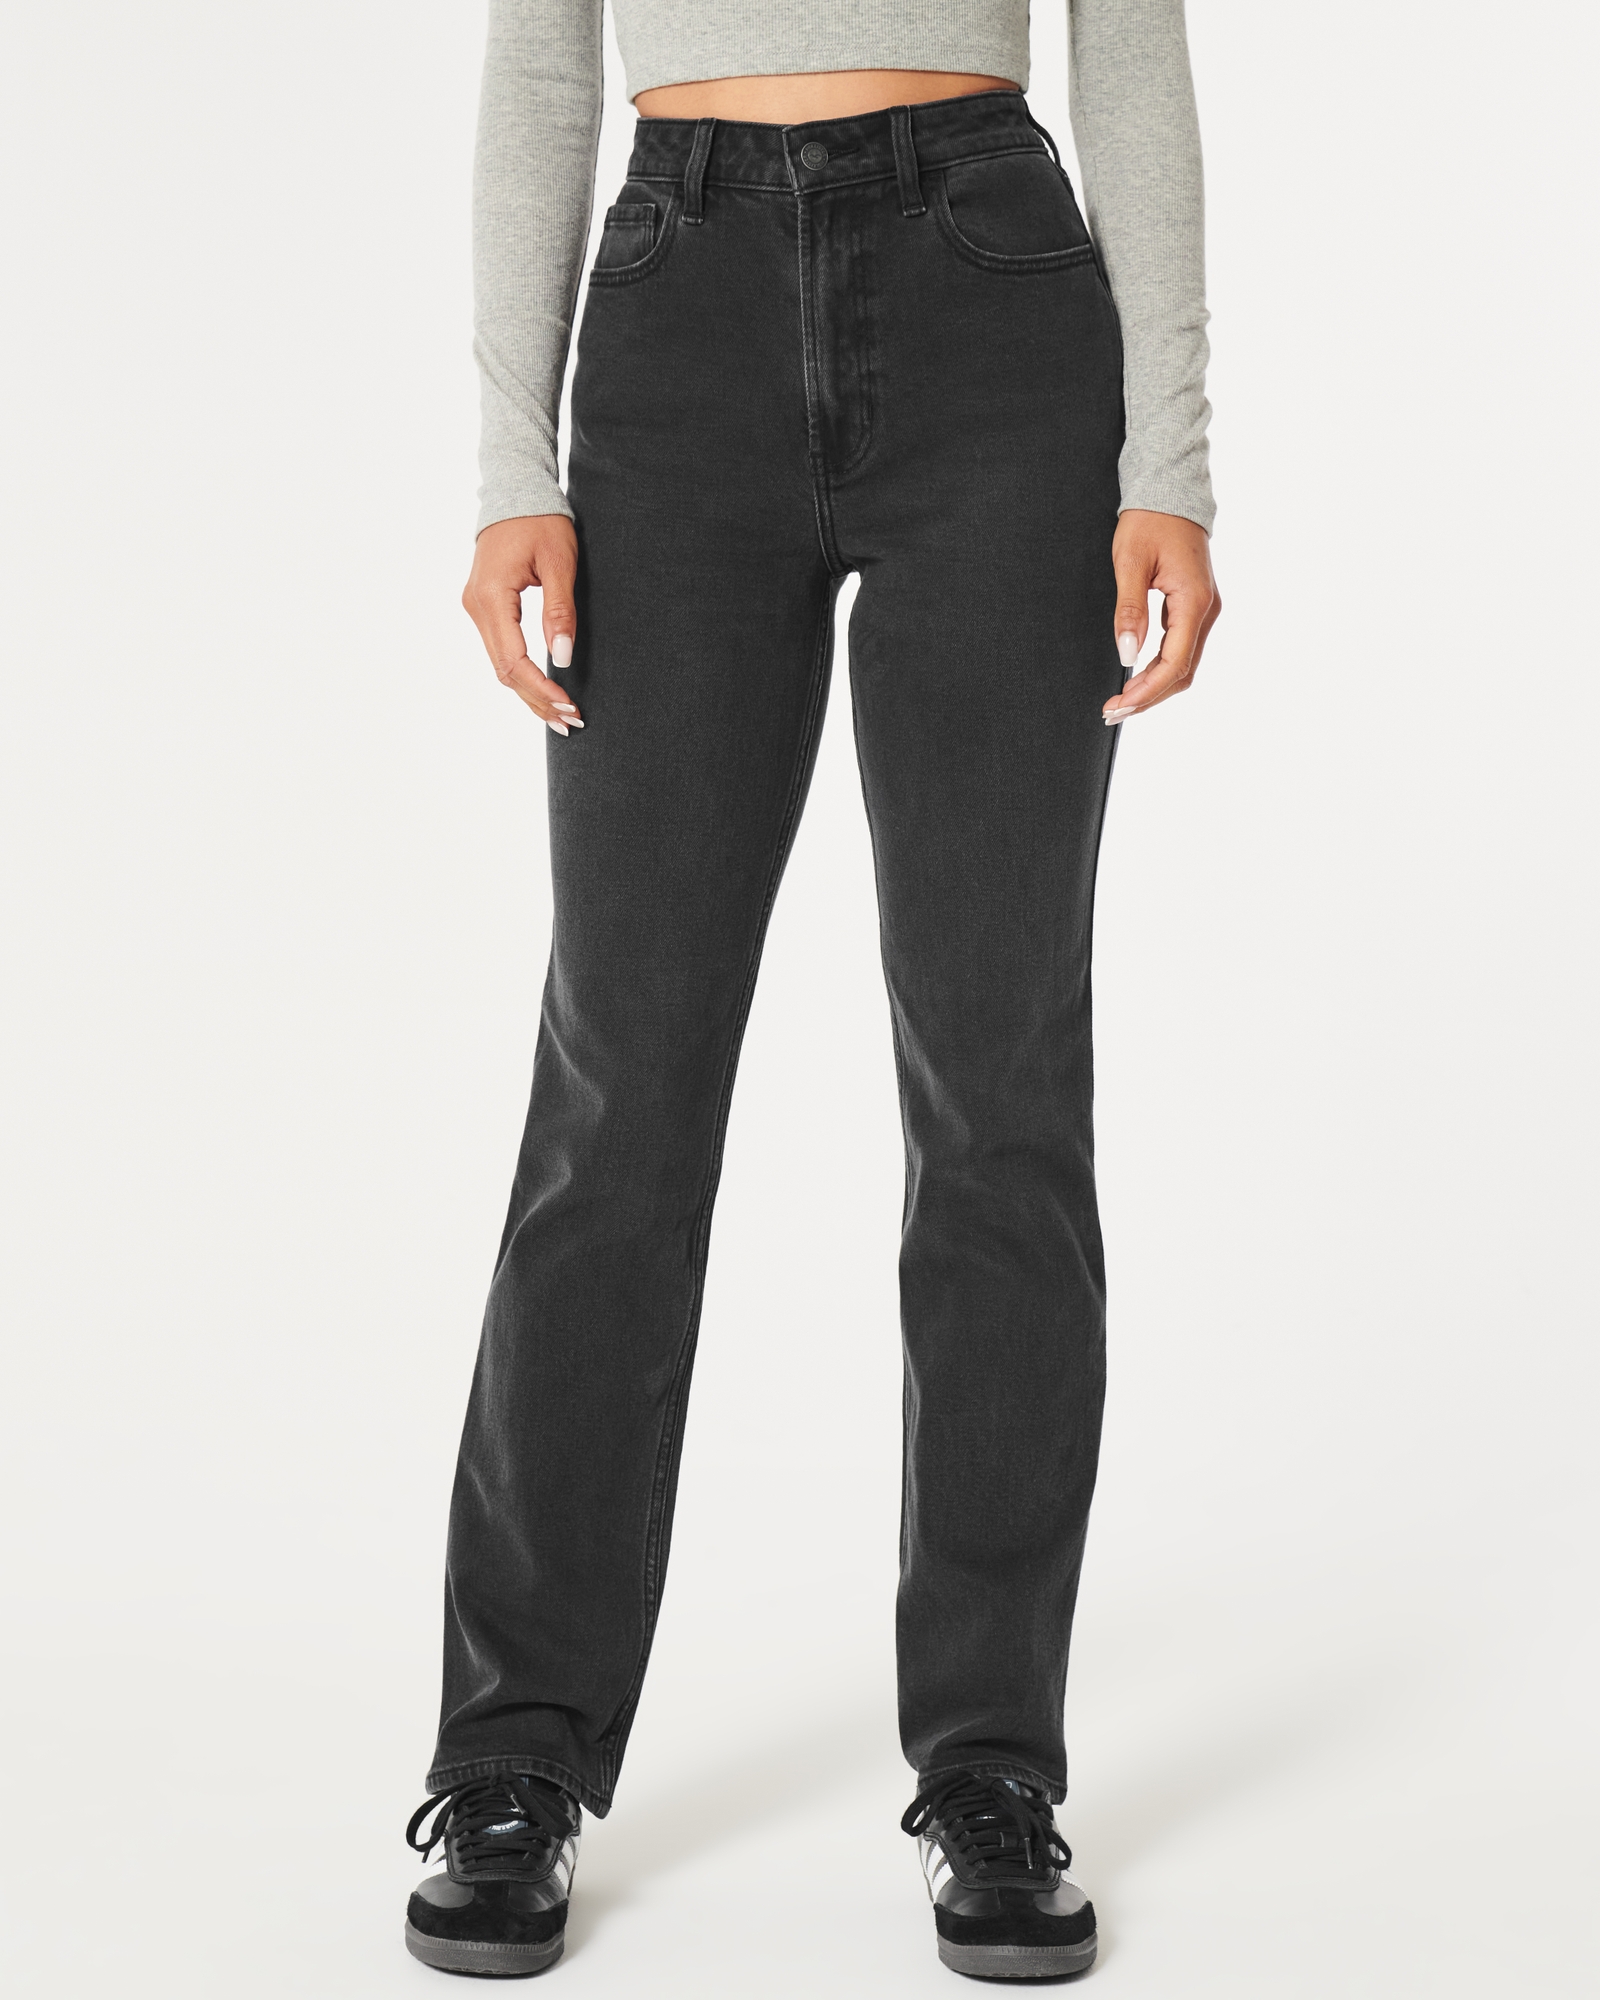 Hollister California Ultra High-Rise Womens Sweatpants, Choose Sz/Color:  M/Black 